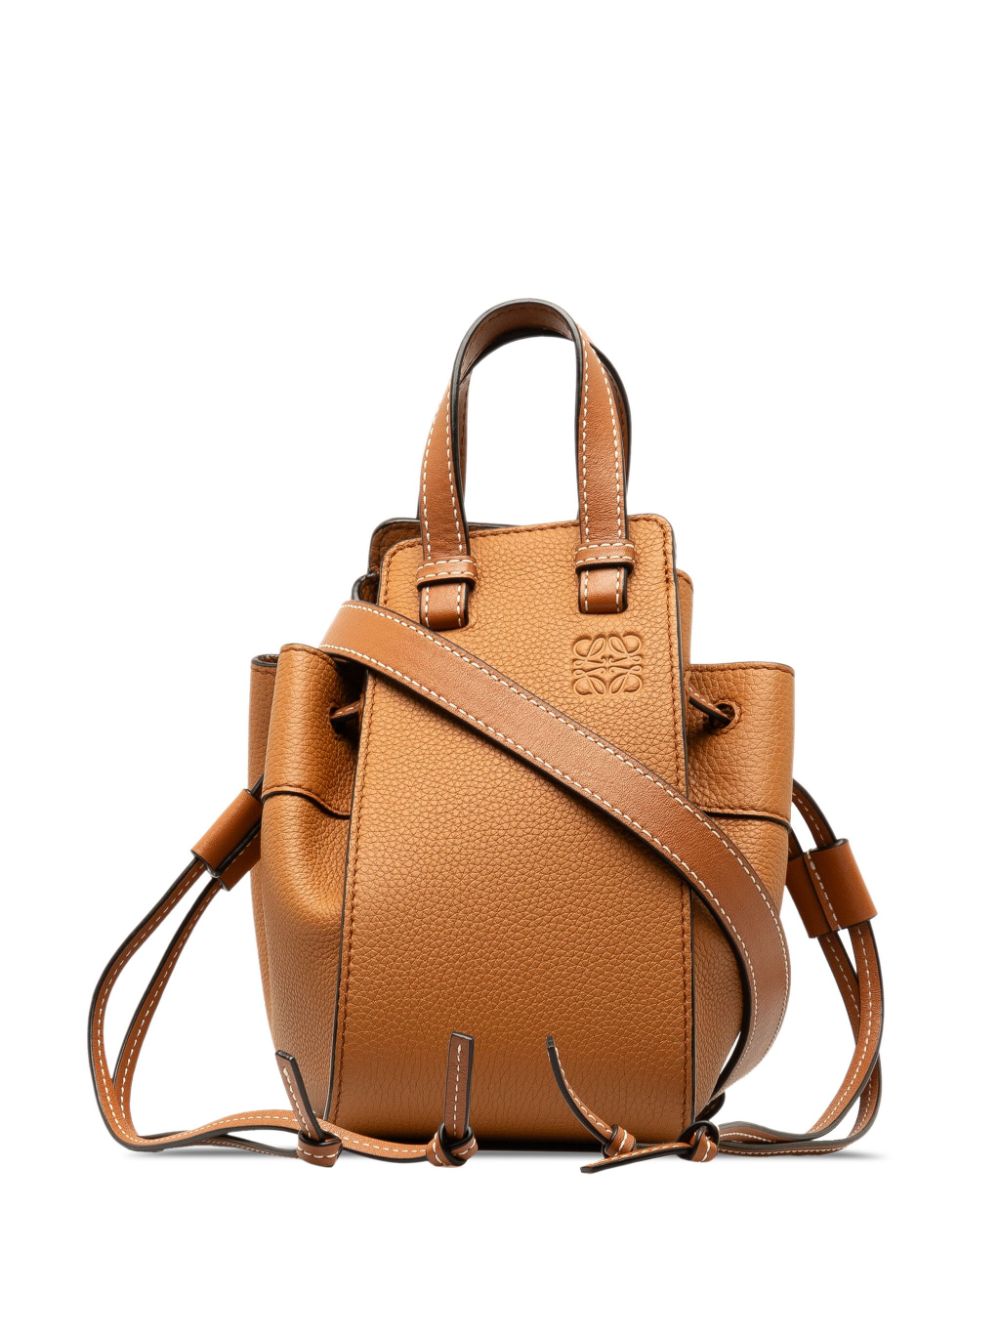 2020 Mini Hammock Bag satchel